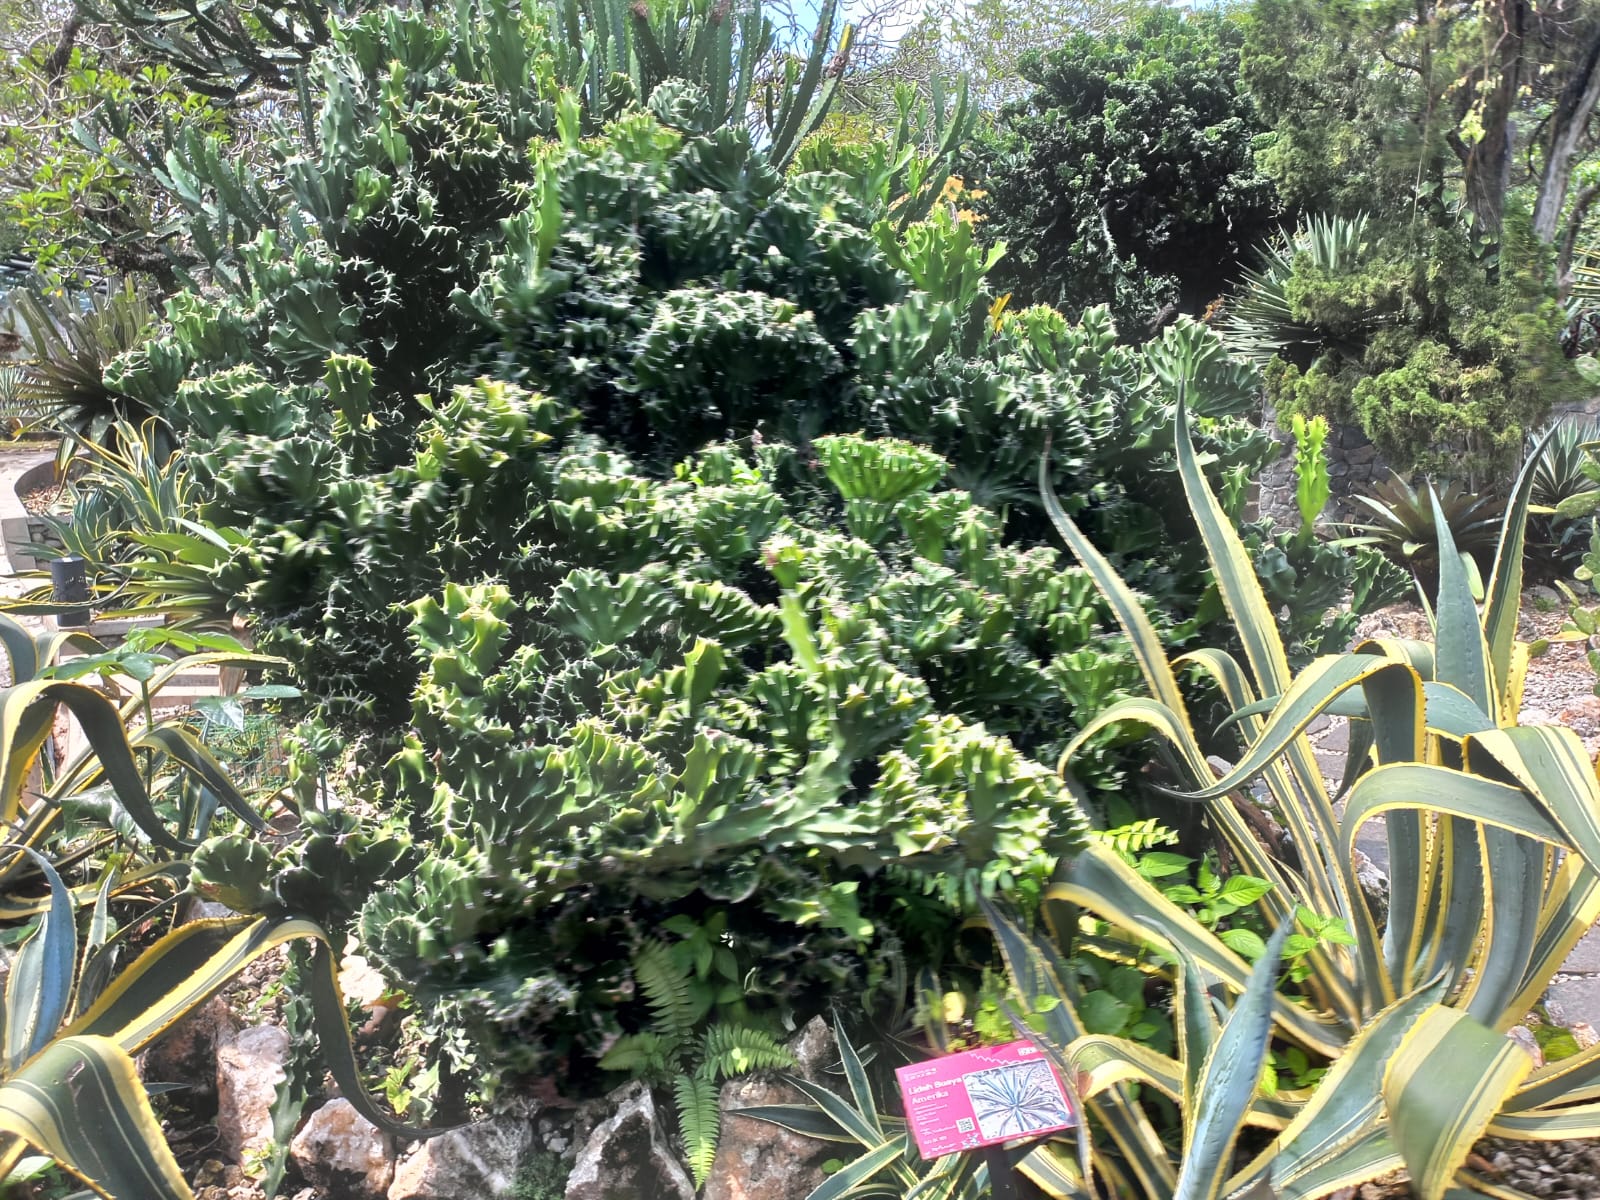 Koleksi Kaktus Kebun Raya Bogor